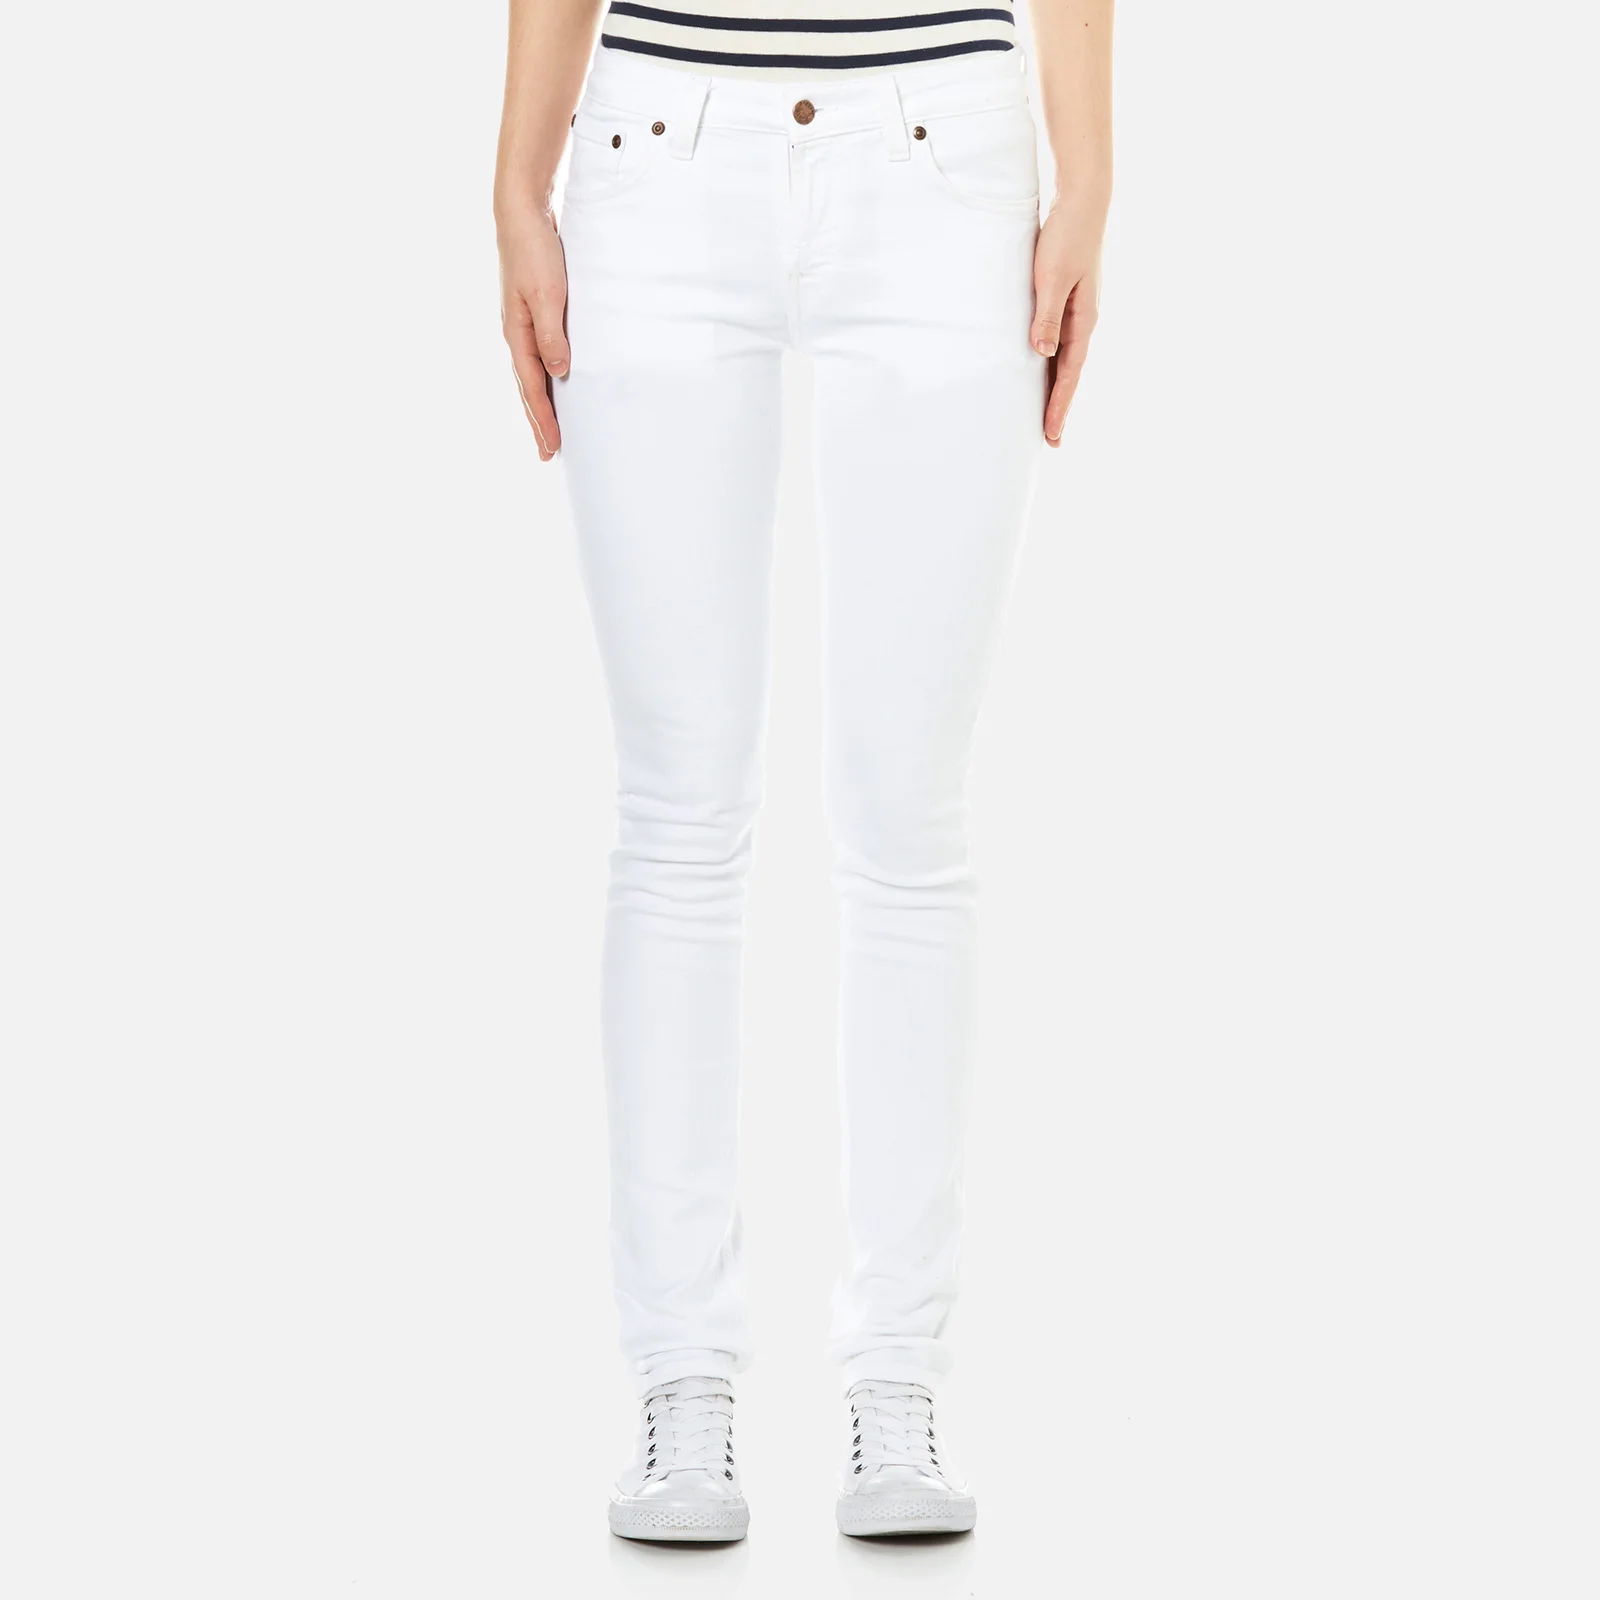 Nudie Jeans Women's Skinny Lin Jeans - Blazing White Image 1